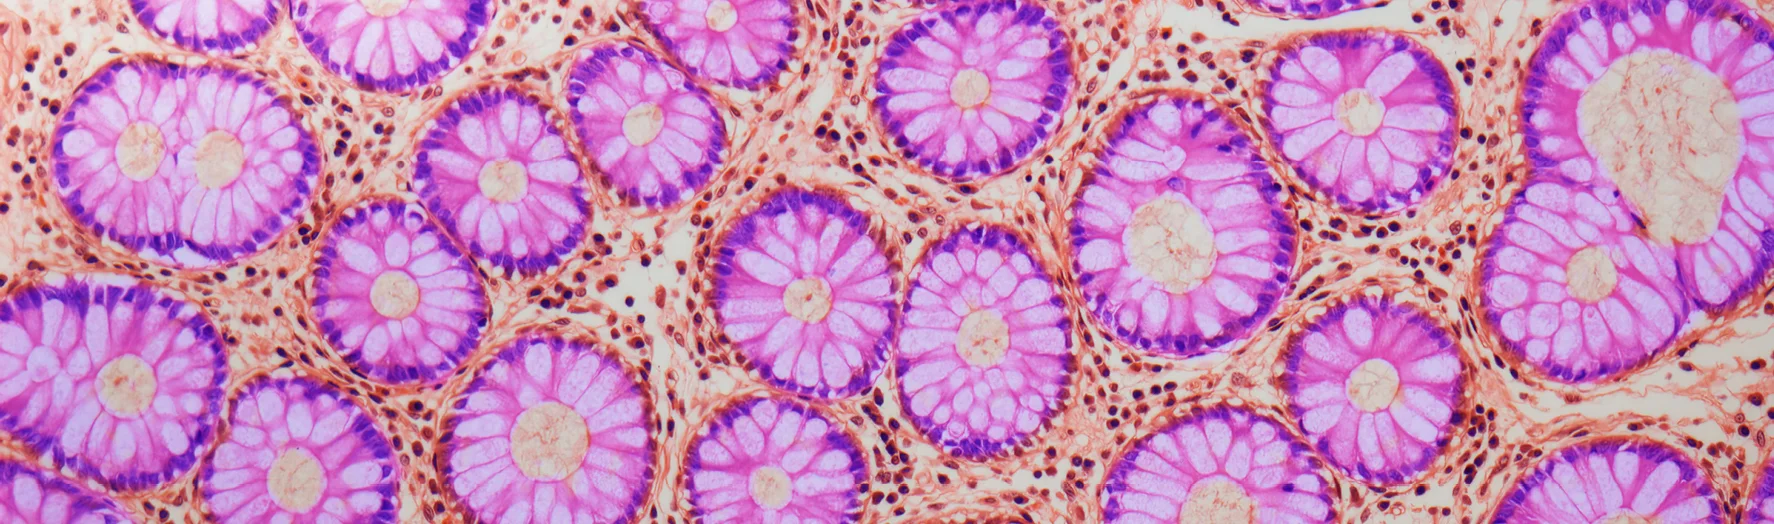 Microscopic image of lieberkuhn